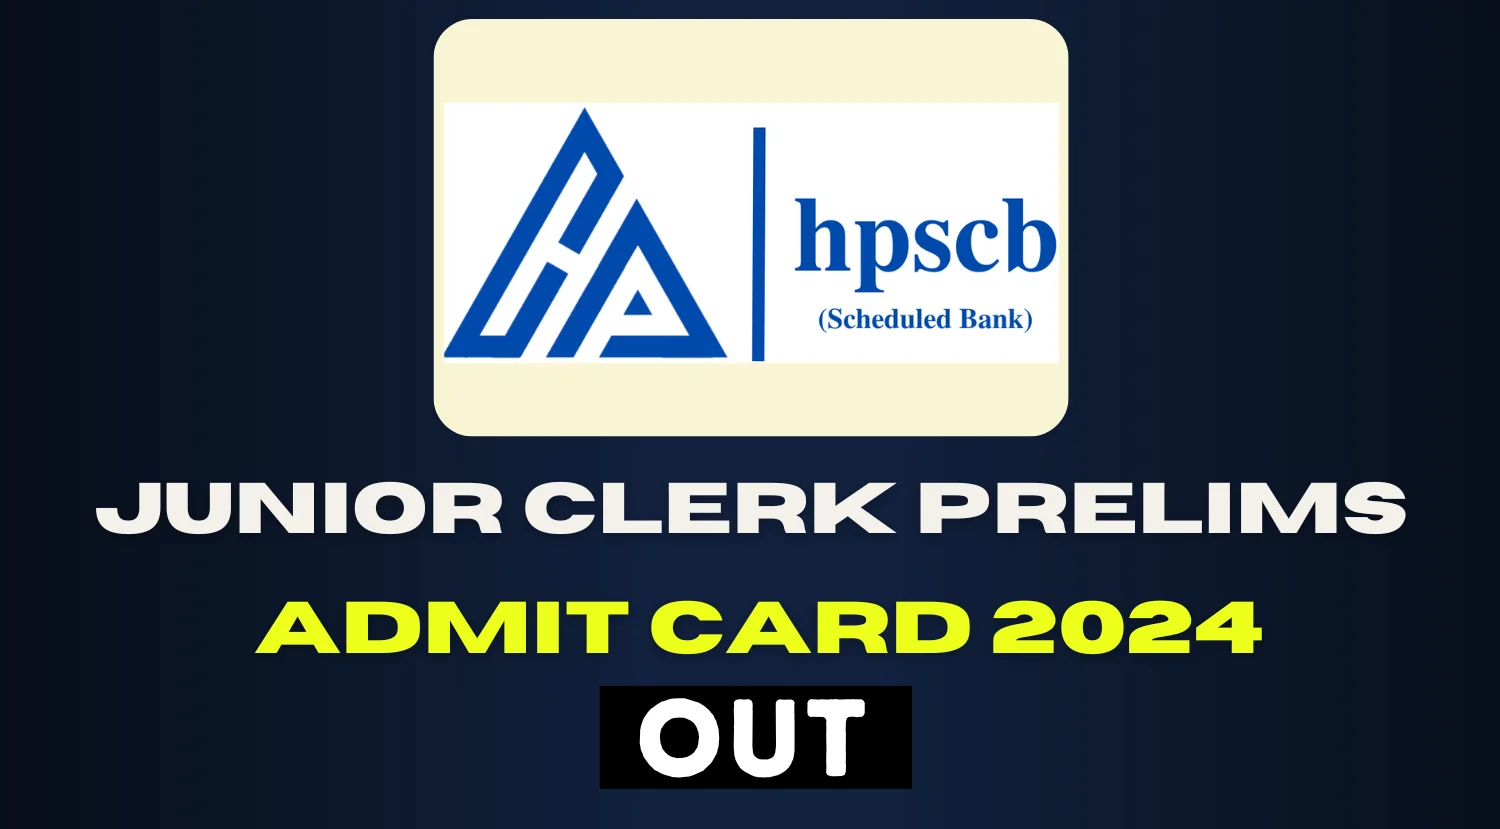 HPSCB Junior Clerk Prelims Admit Card 2024 OUT